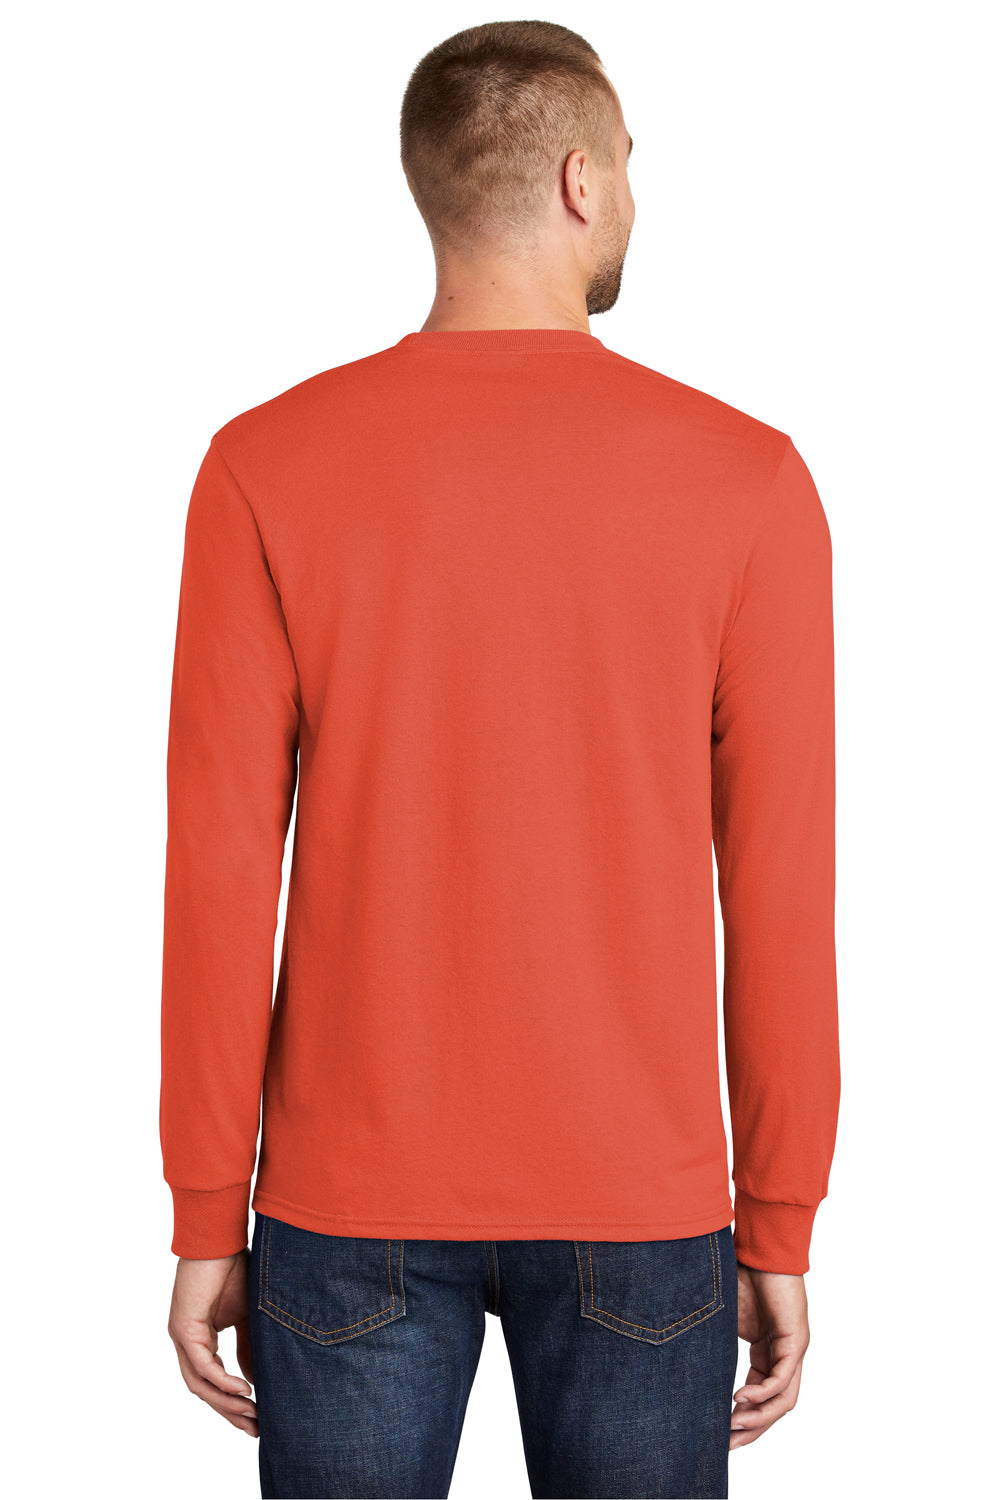 Port & Company PC55LS Mens Core Long Sleeve Crewneck T-Shirt Orange Back